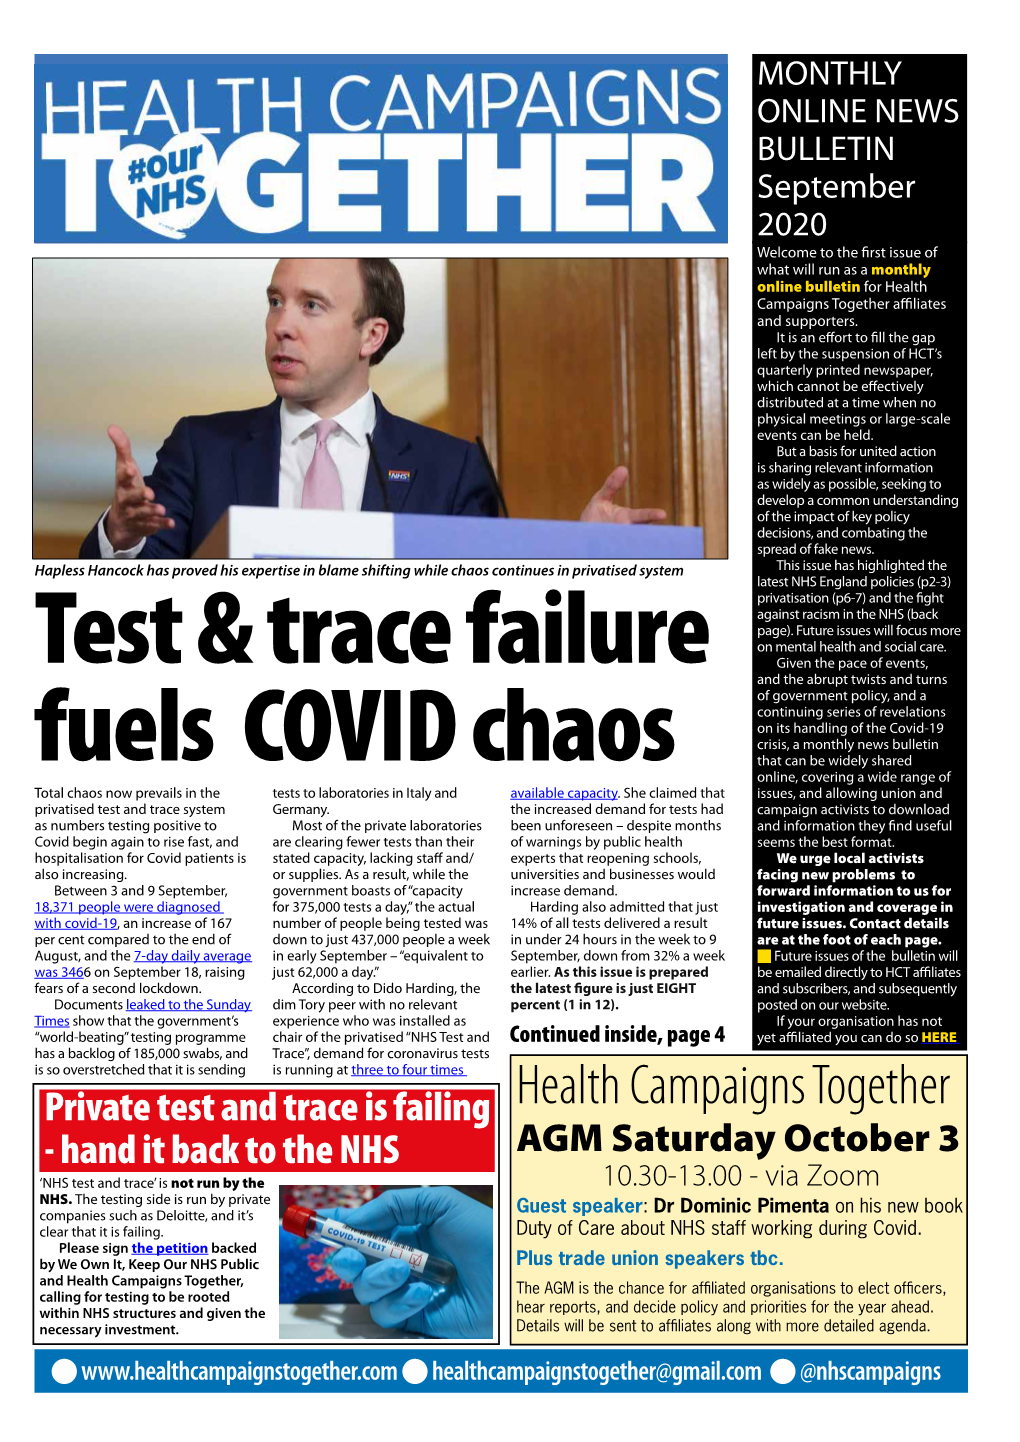 Test & Trace Failure Fuels COVID Chaos